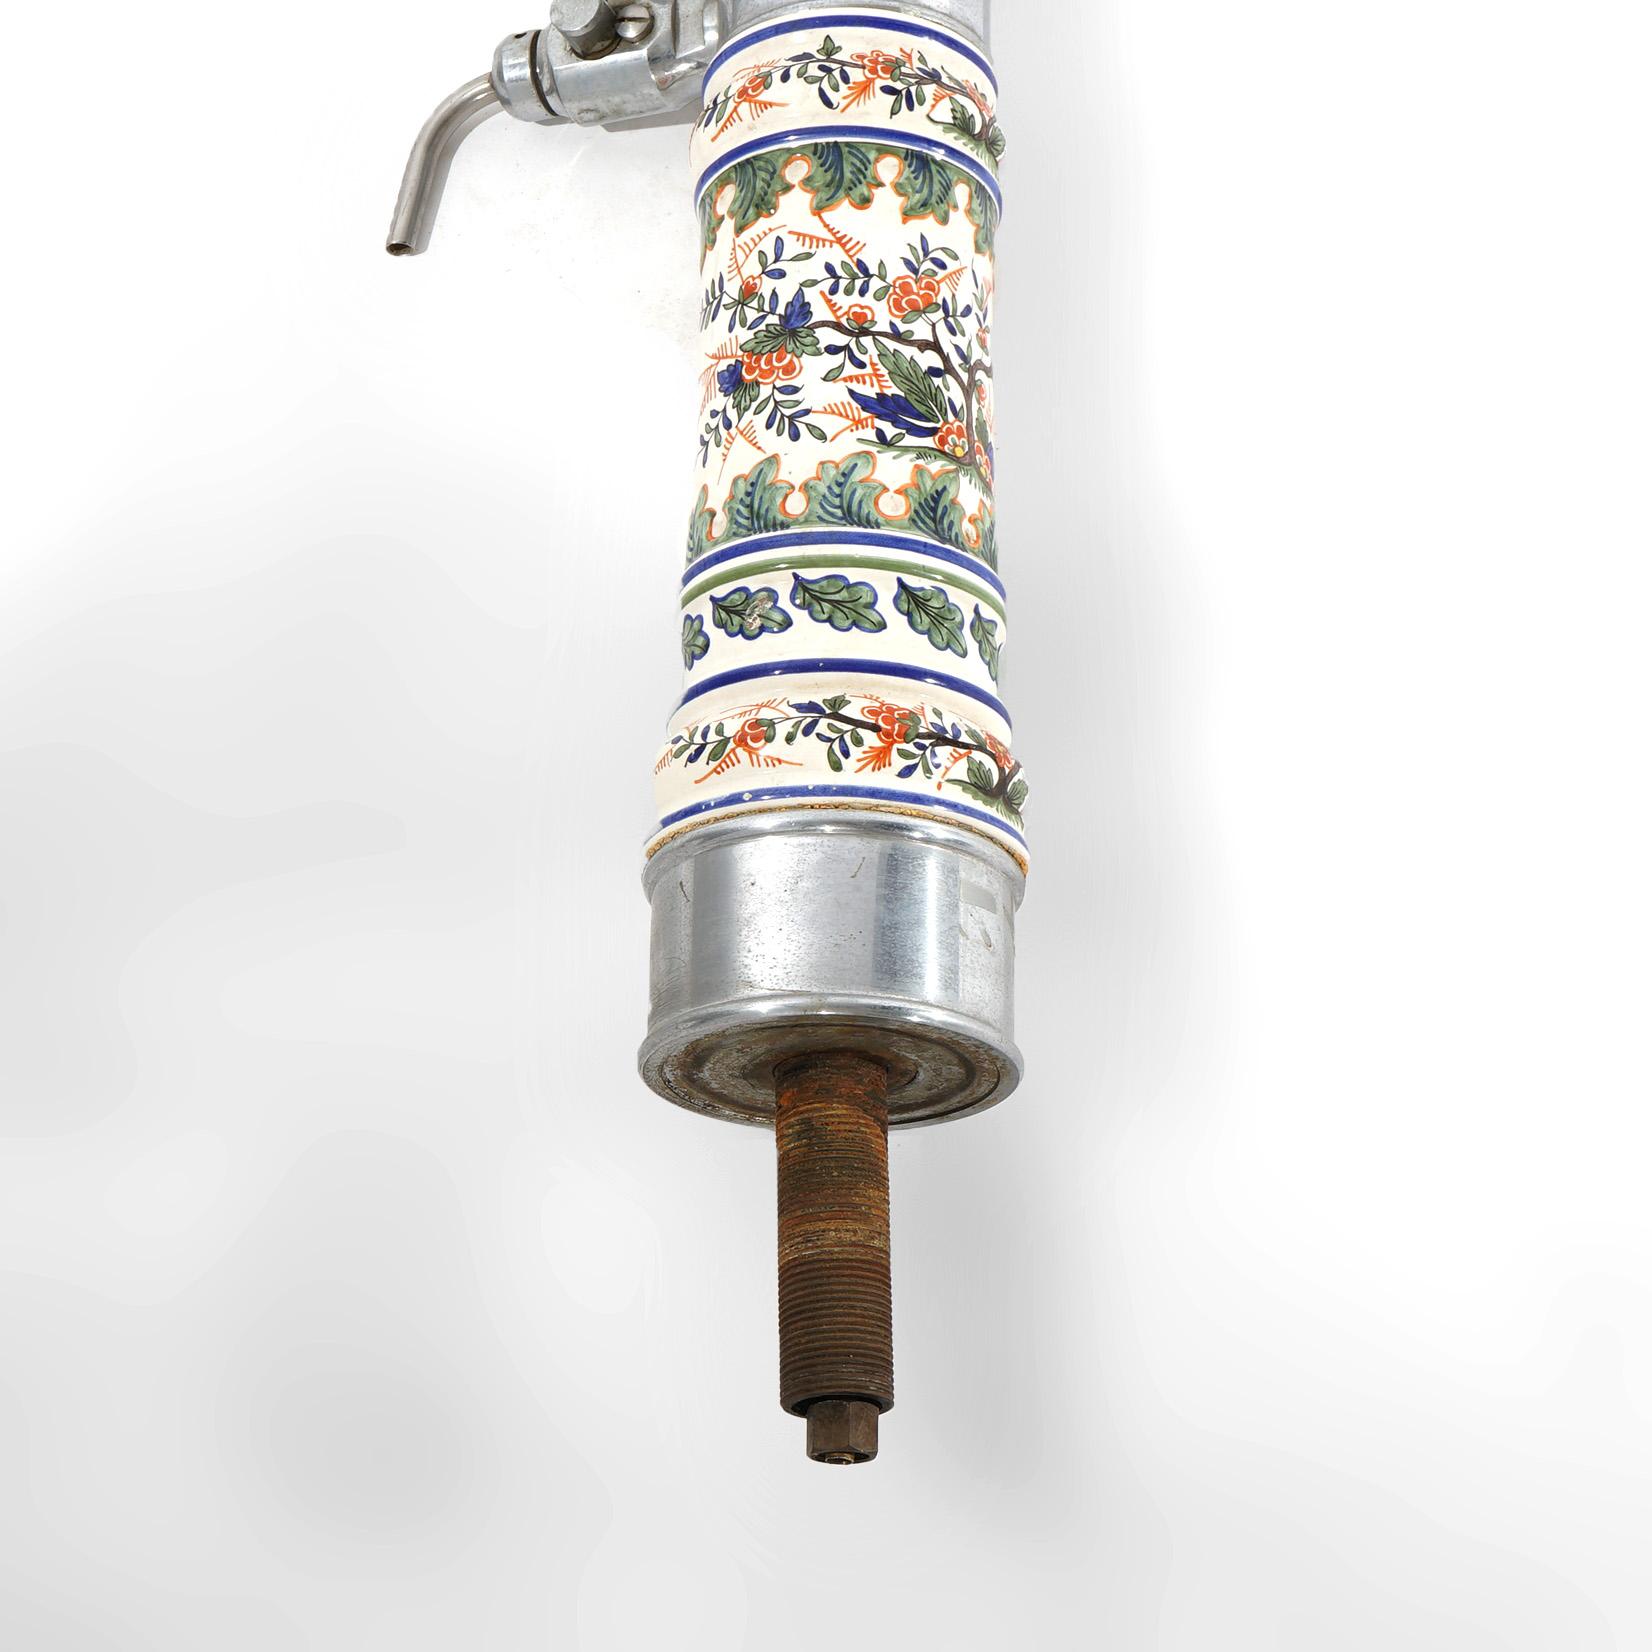 Antique German Chrome & Polychromed Foliate & Floral Pottery Beer Keg Tap C1920 For Sale 4